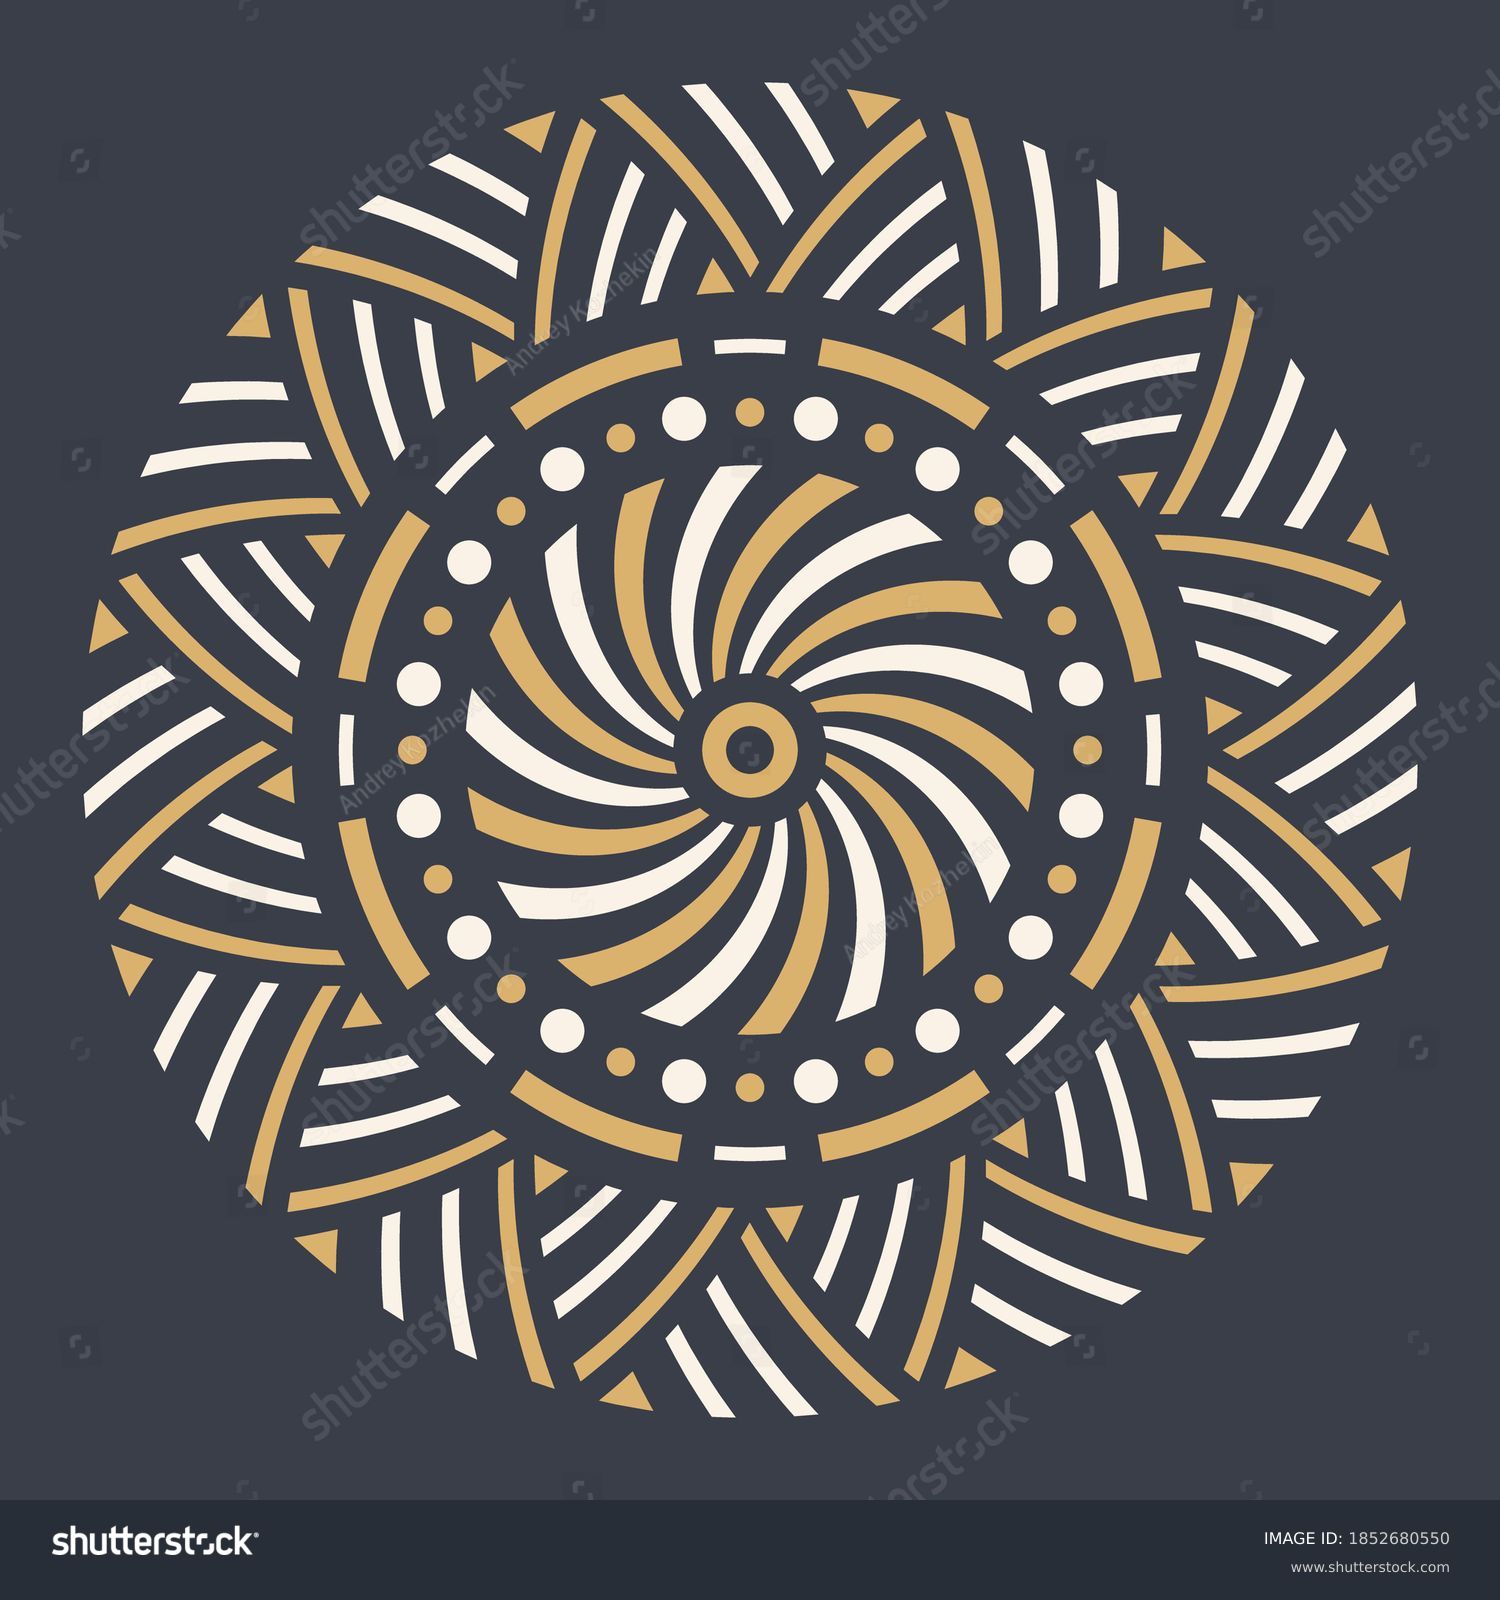 SVG of Abstract circular ornament. Ethnic mandala. Stylized sun symbol. Rosette of geometric elements. Tribal ethnic motif.  Round  color pattern. Decorative vector design element. svg